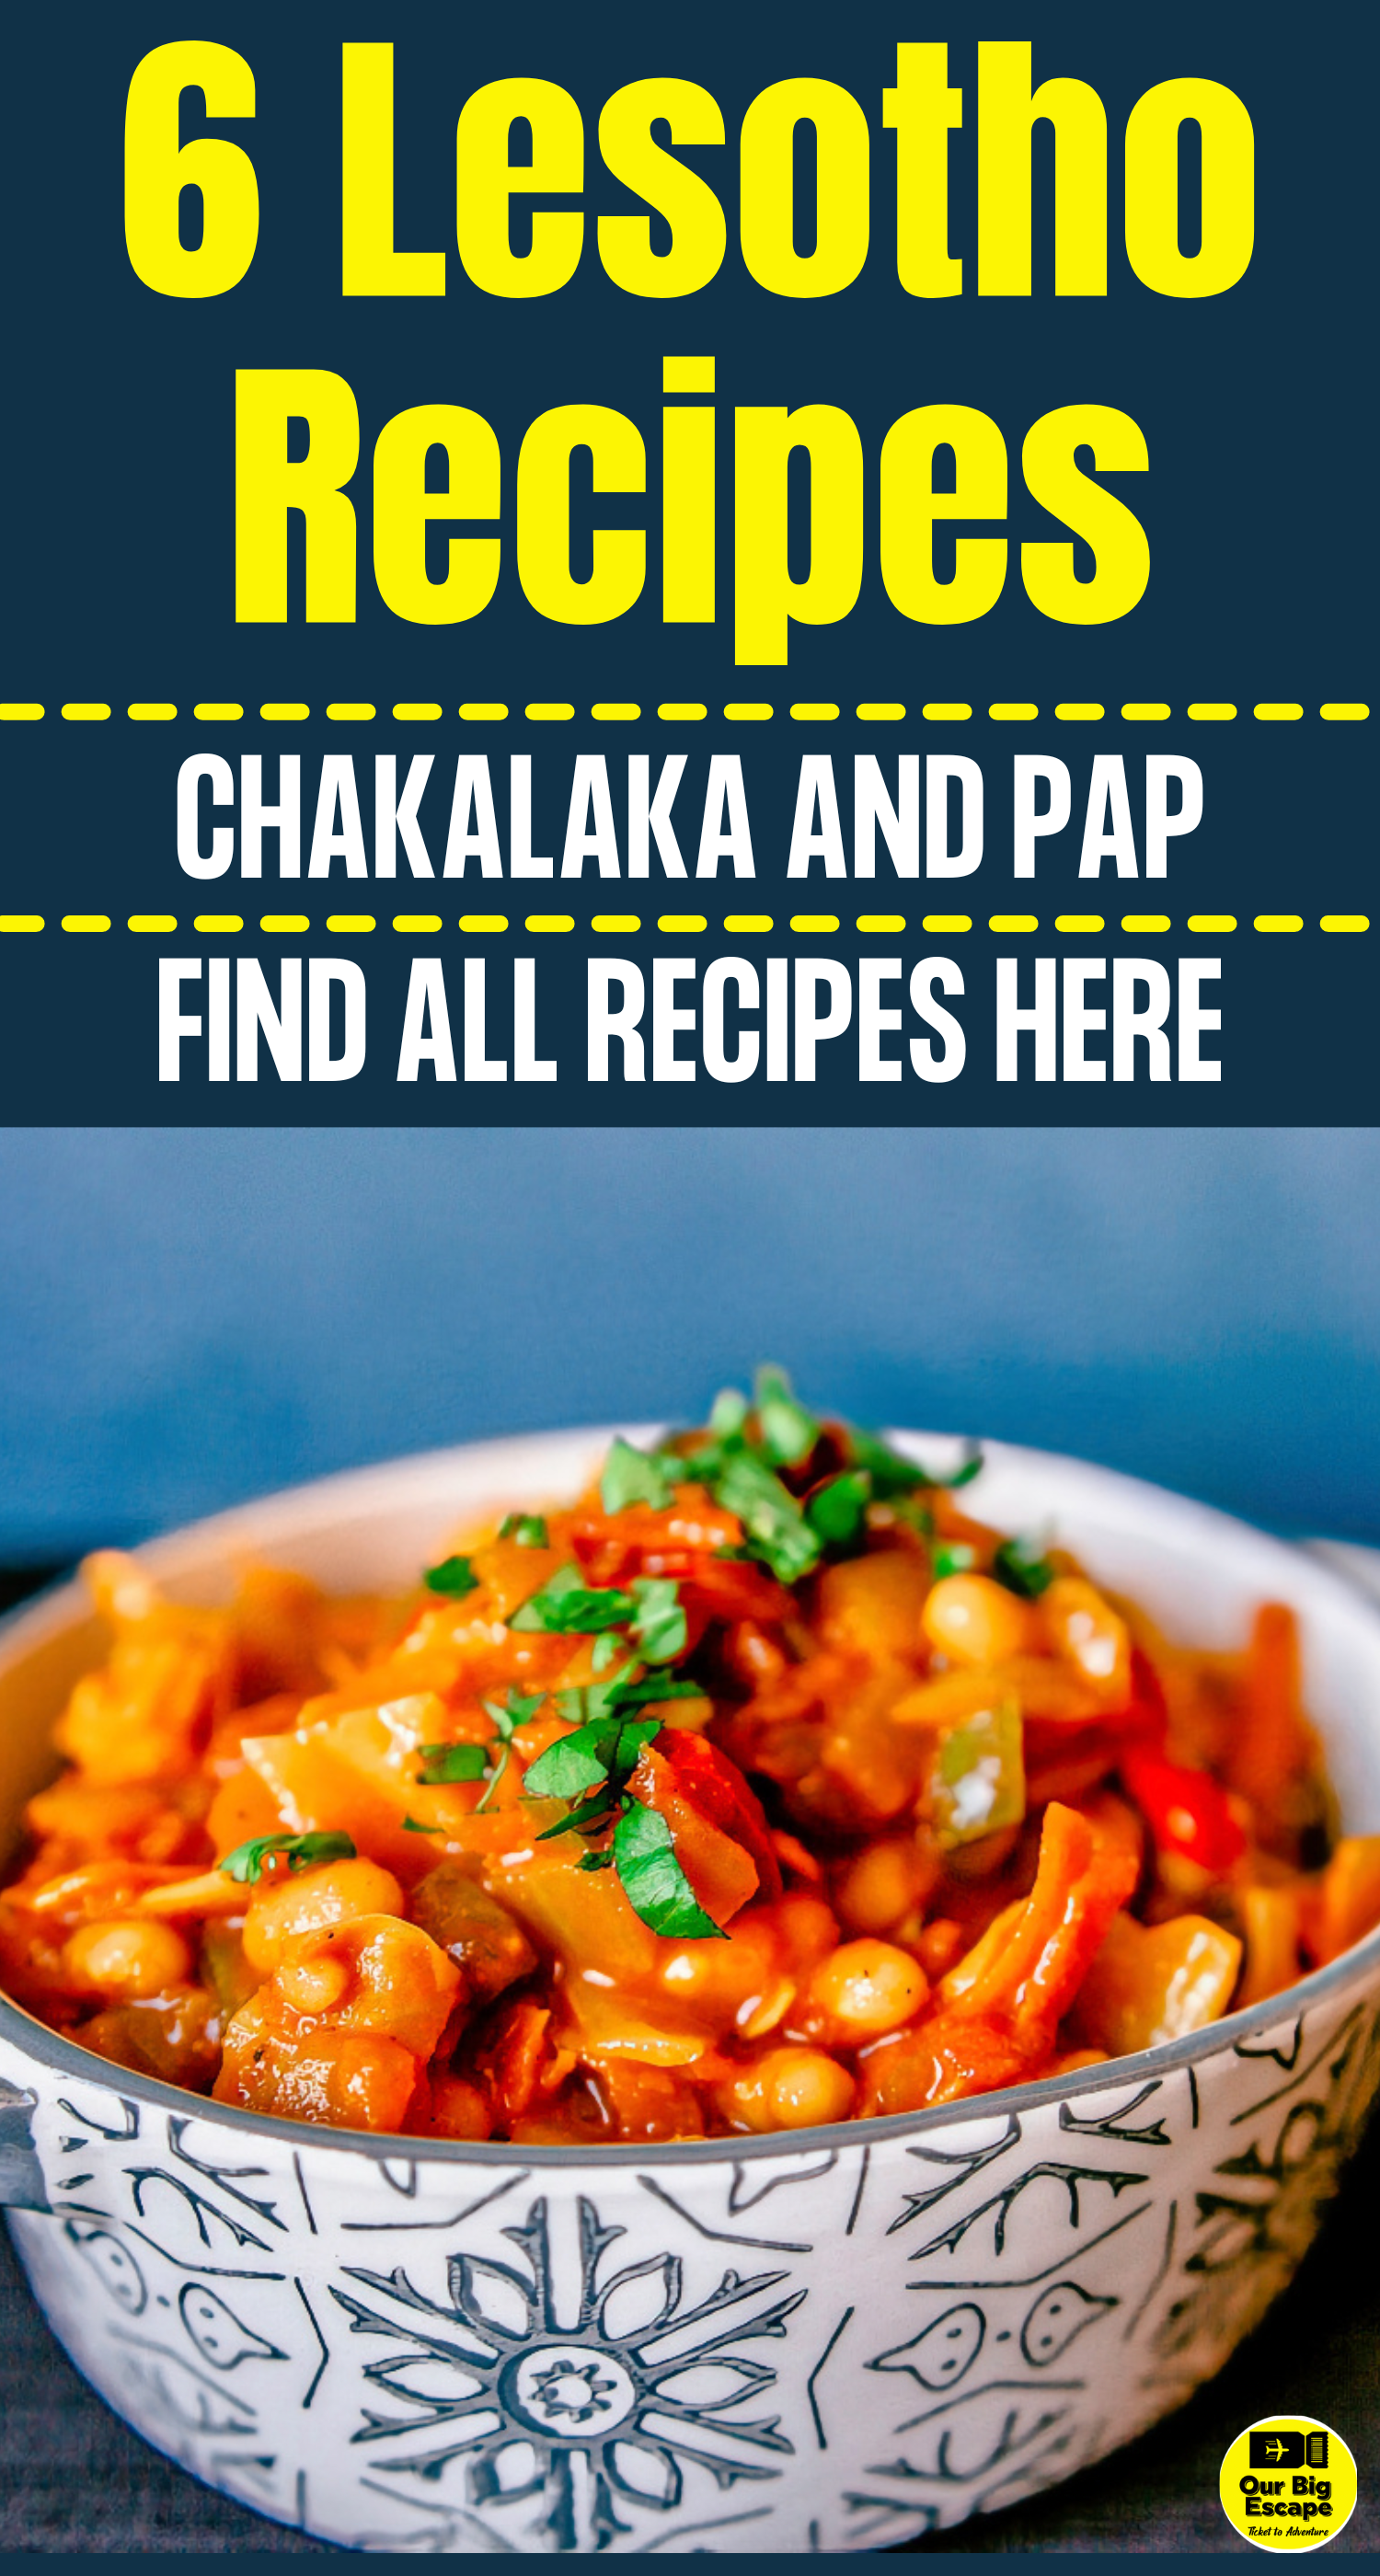 6 Lesotho Recipes - Chakalaka and Pap